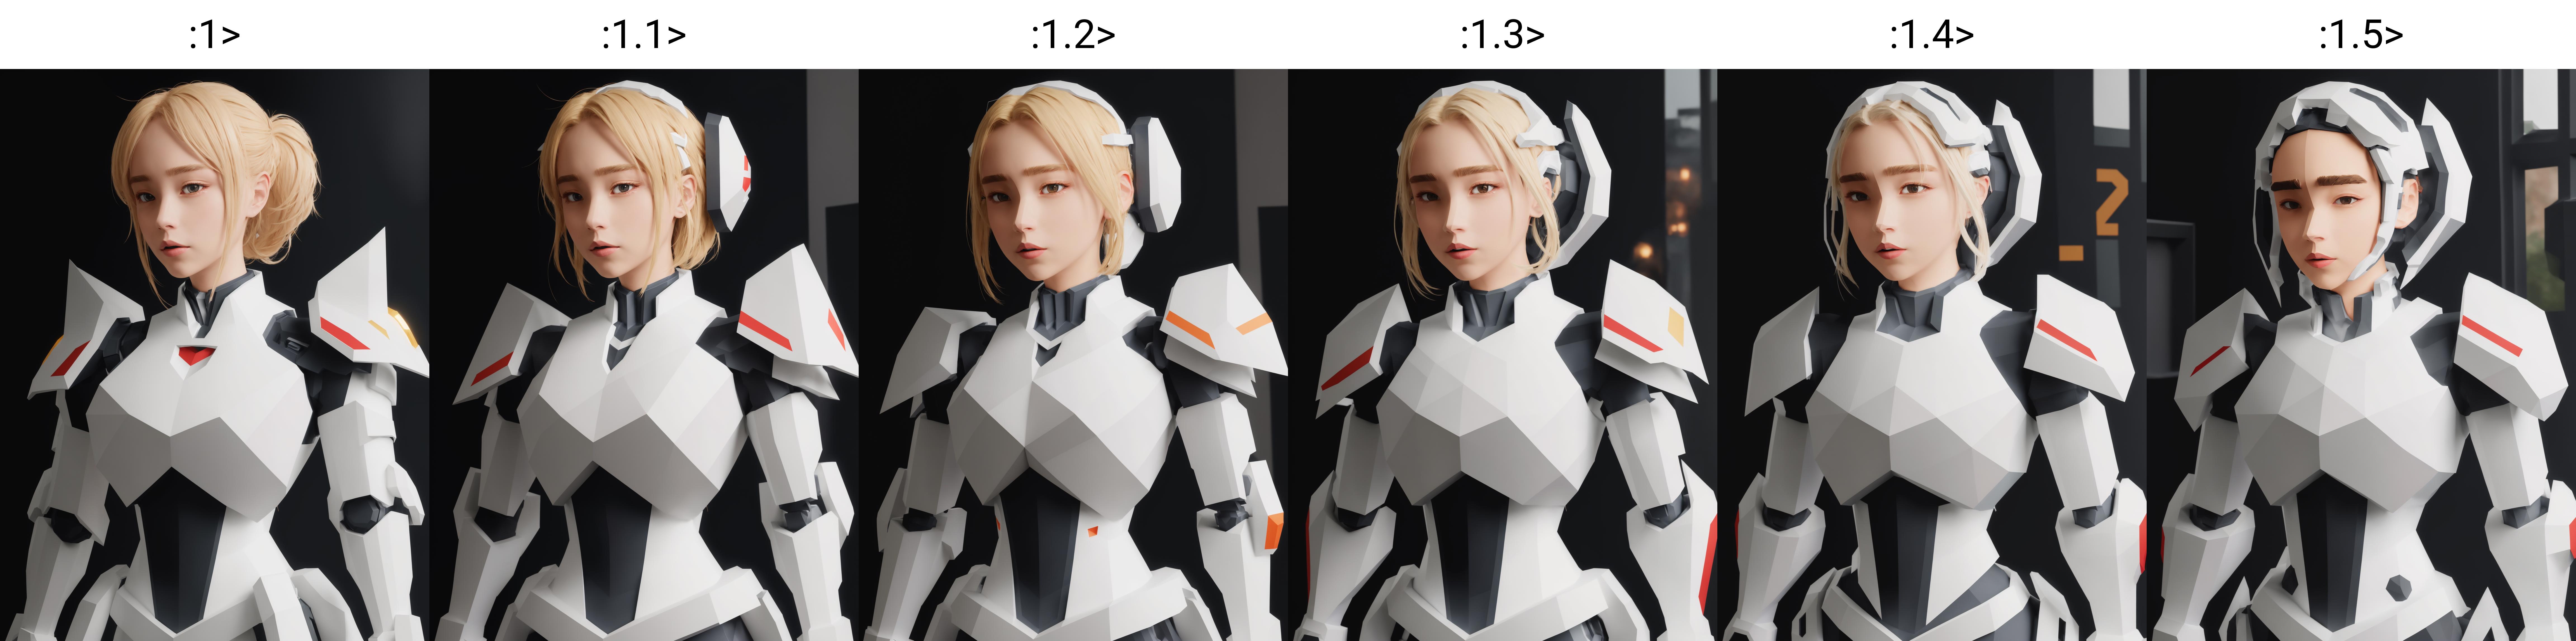 AI model image by TangBohu